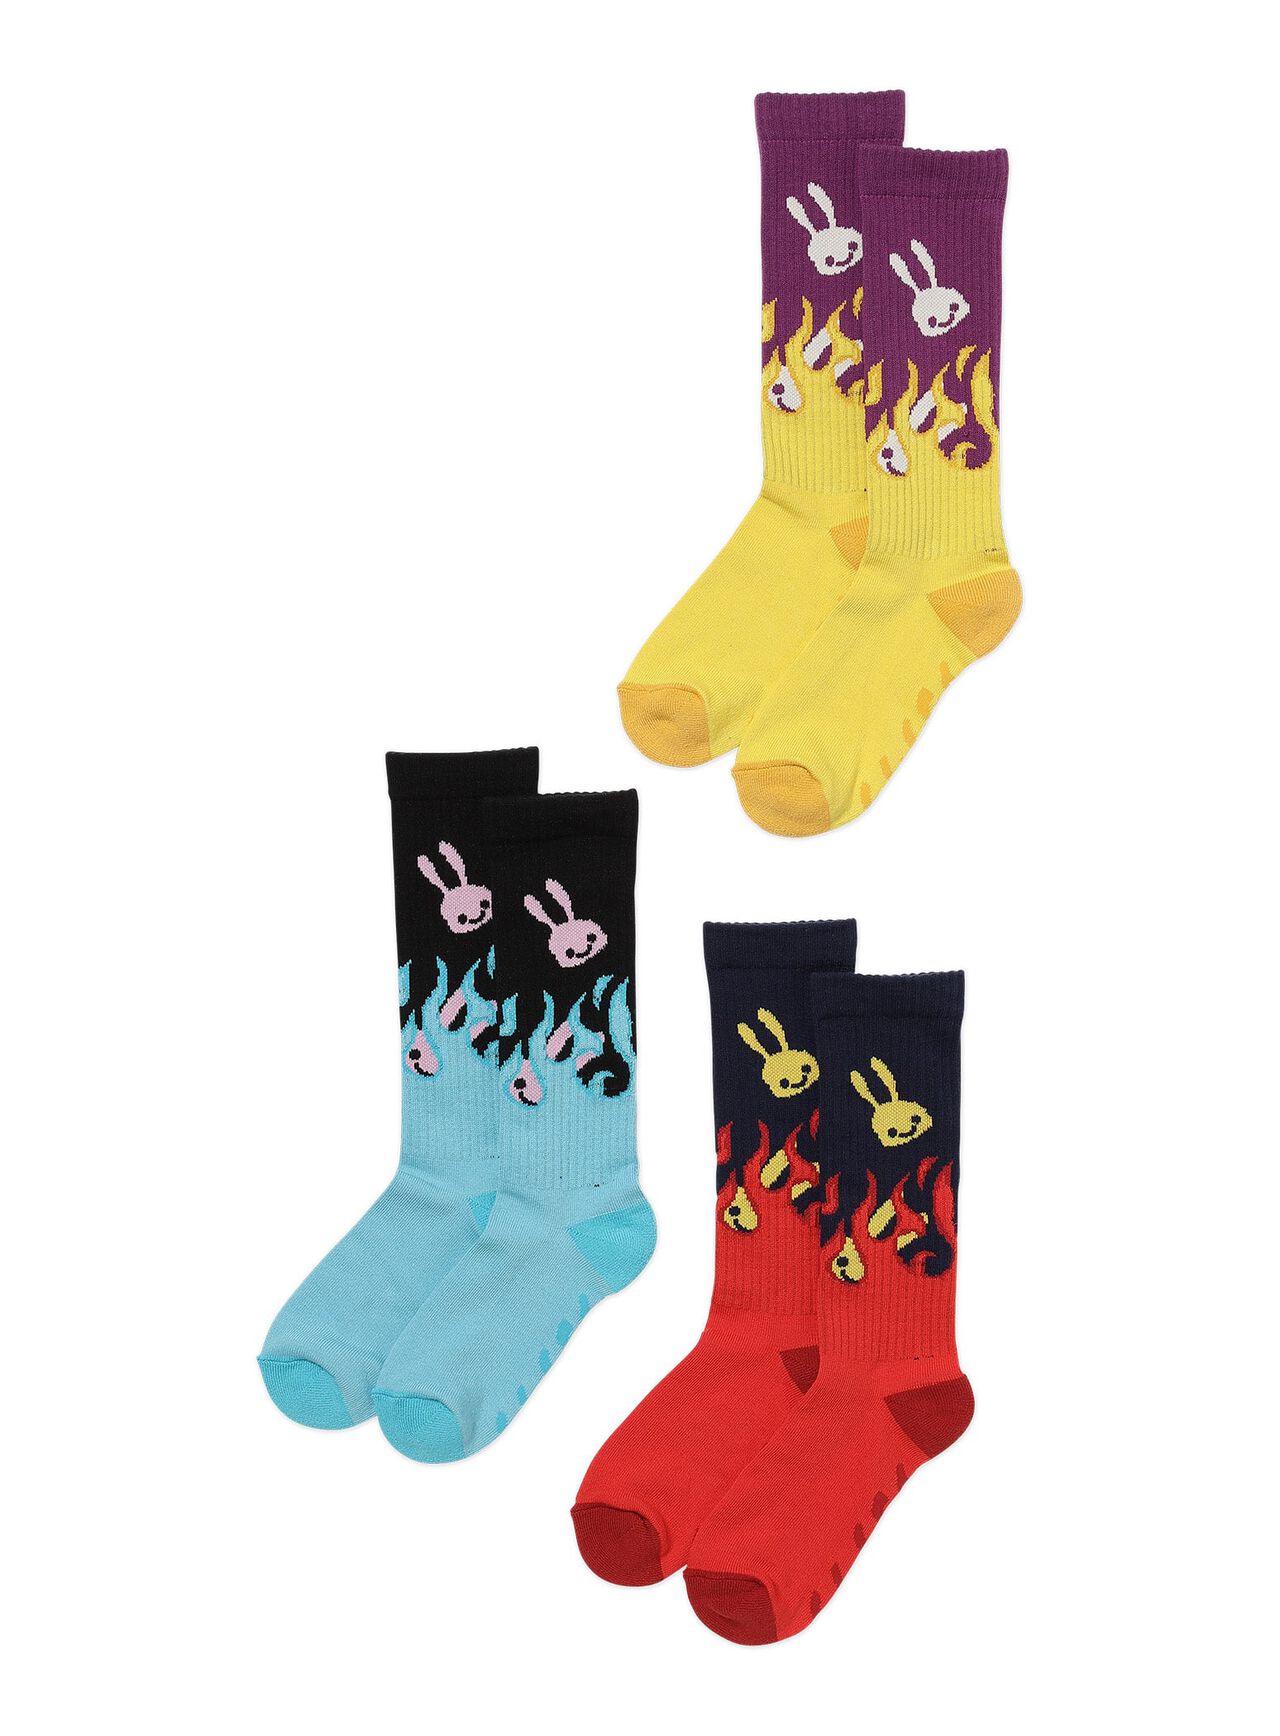 THLJ Souvenir Fire Socks,ONE, large image number 1